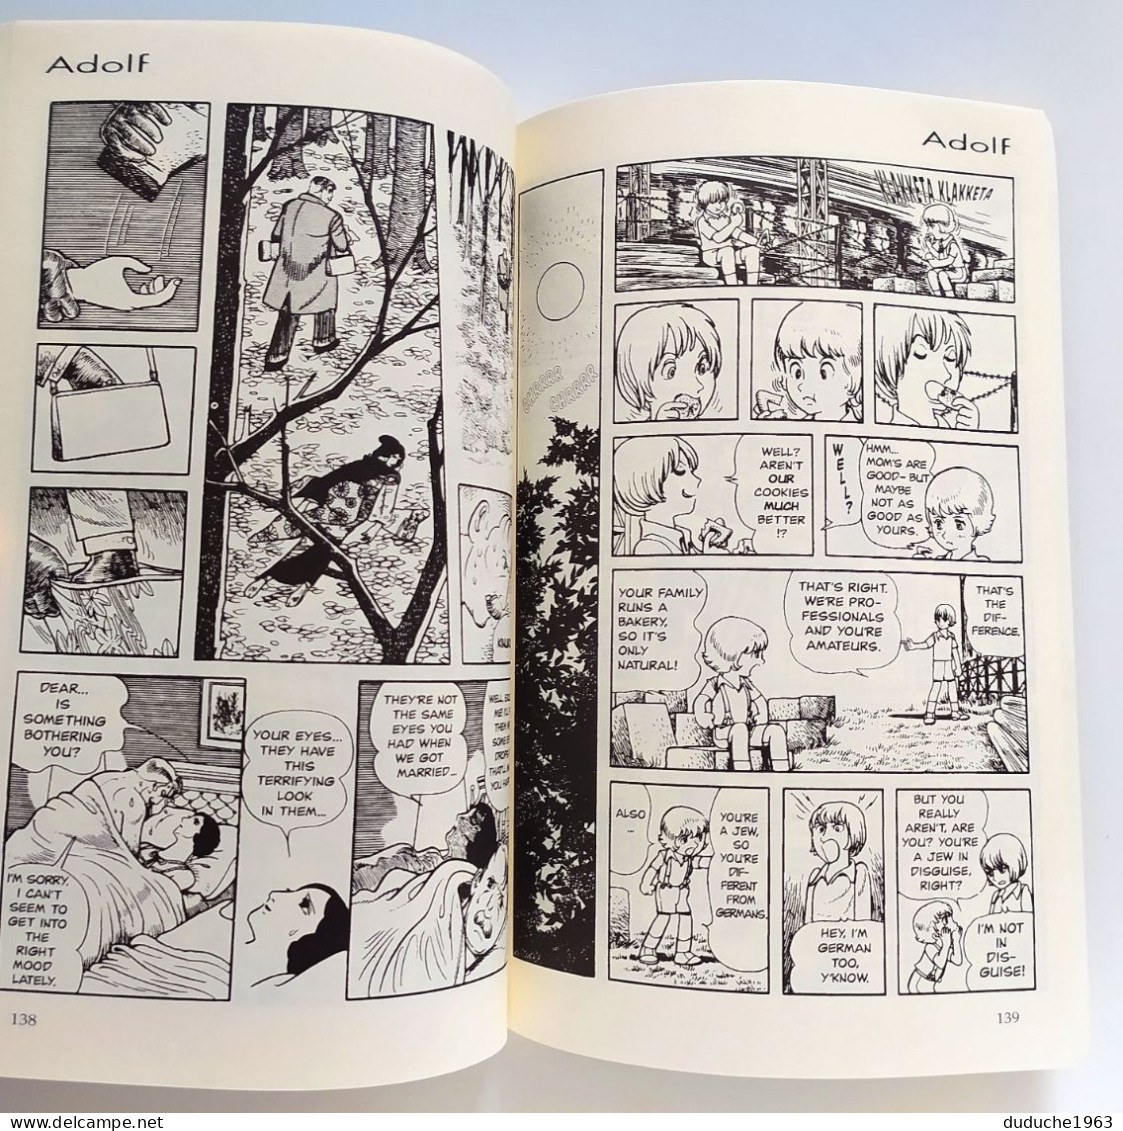 Adolf - A Tale Of The Twentieth Century. Osamu Tezuka - Otros Editores